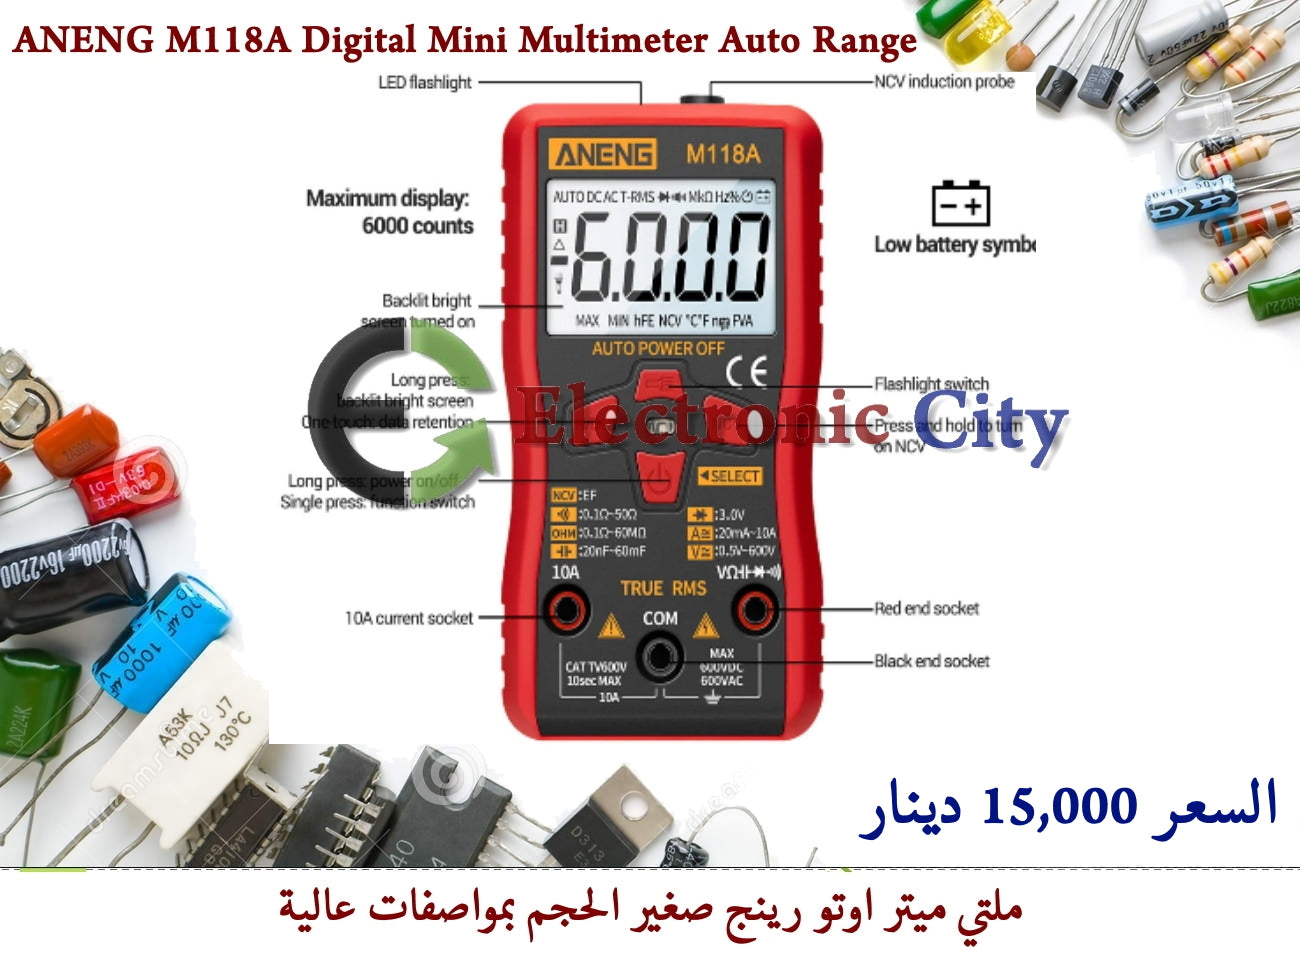 ANENG M118A Digital Mini Multimeter Auto Range